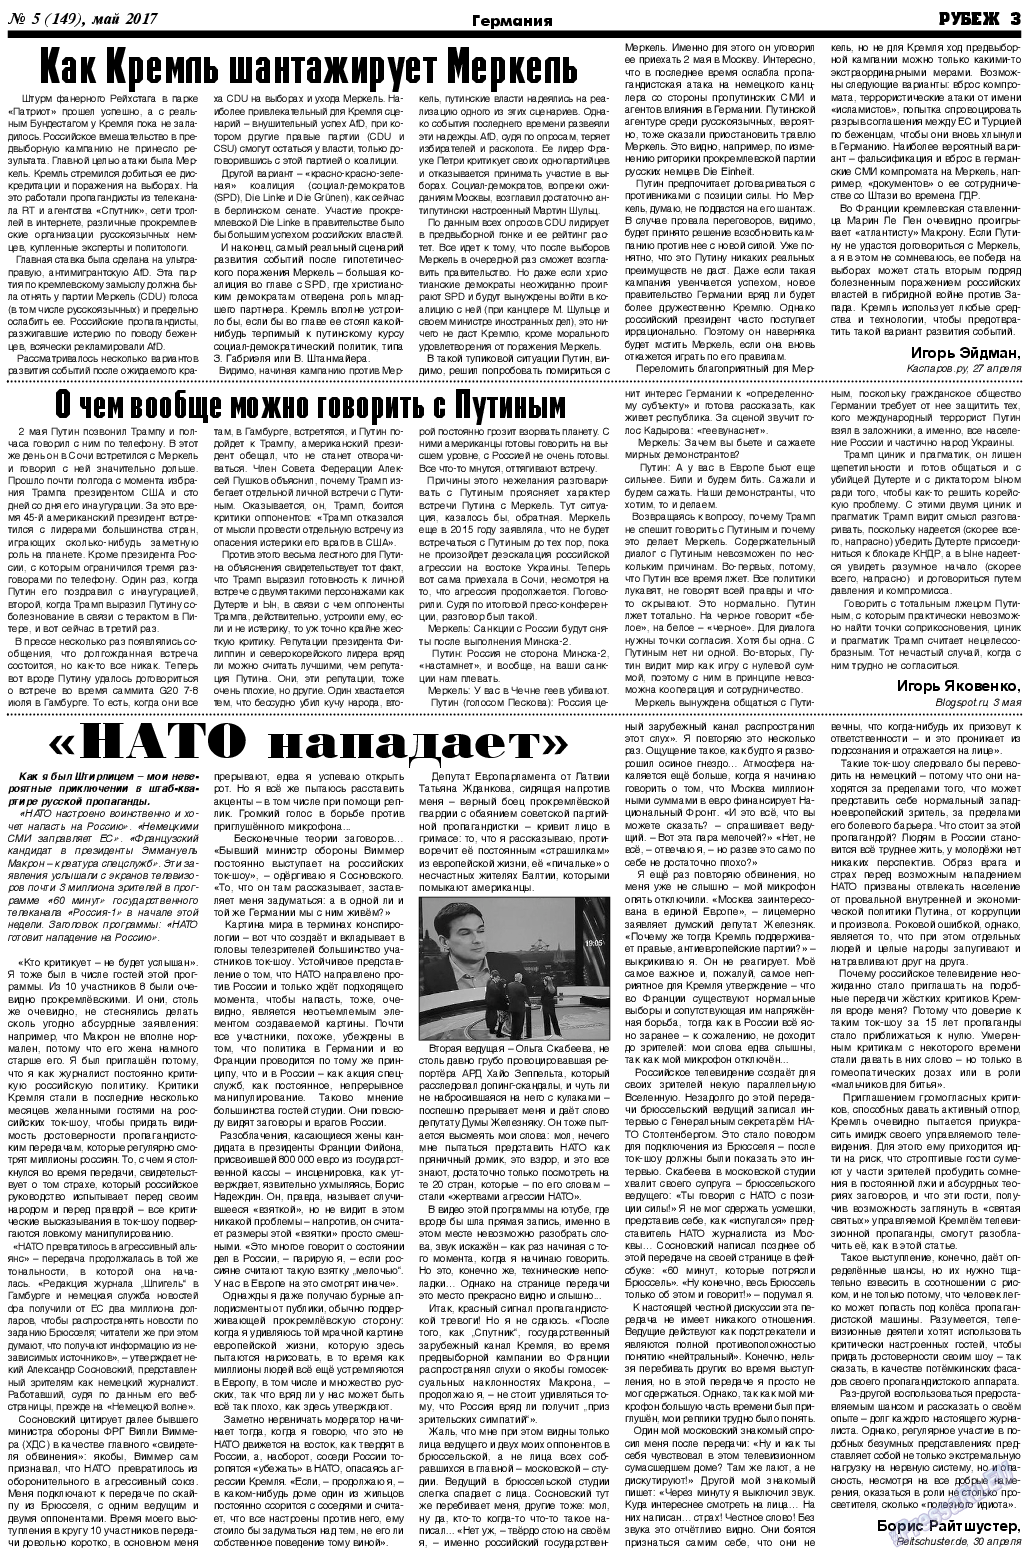 Рубеж, газета. 2017 №5 стр.3